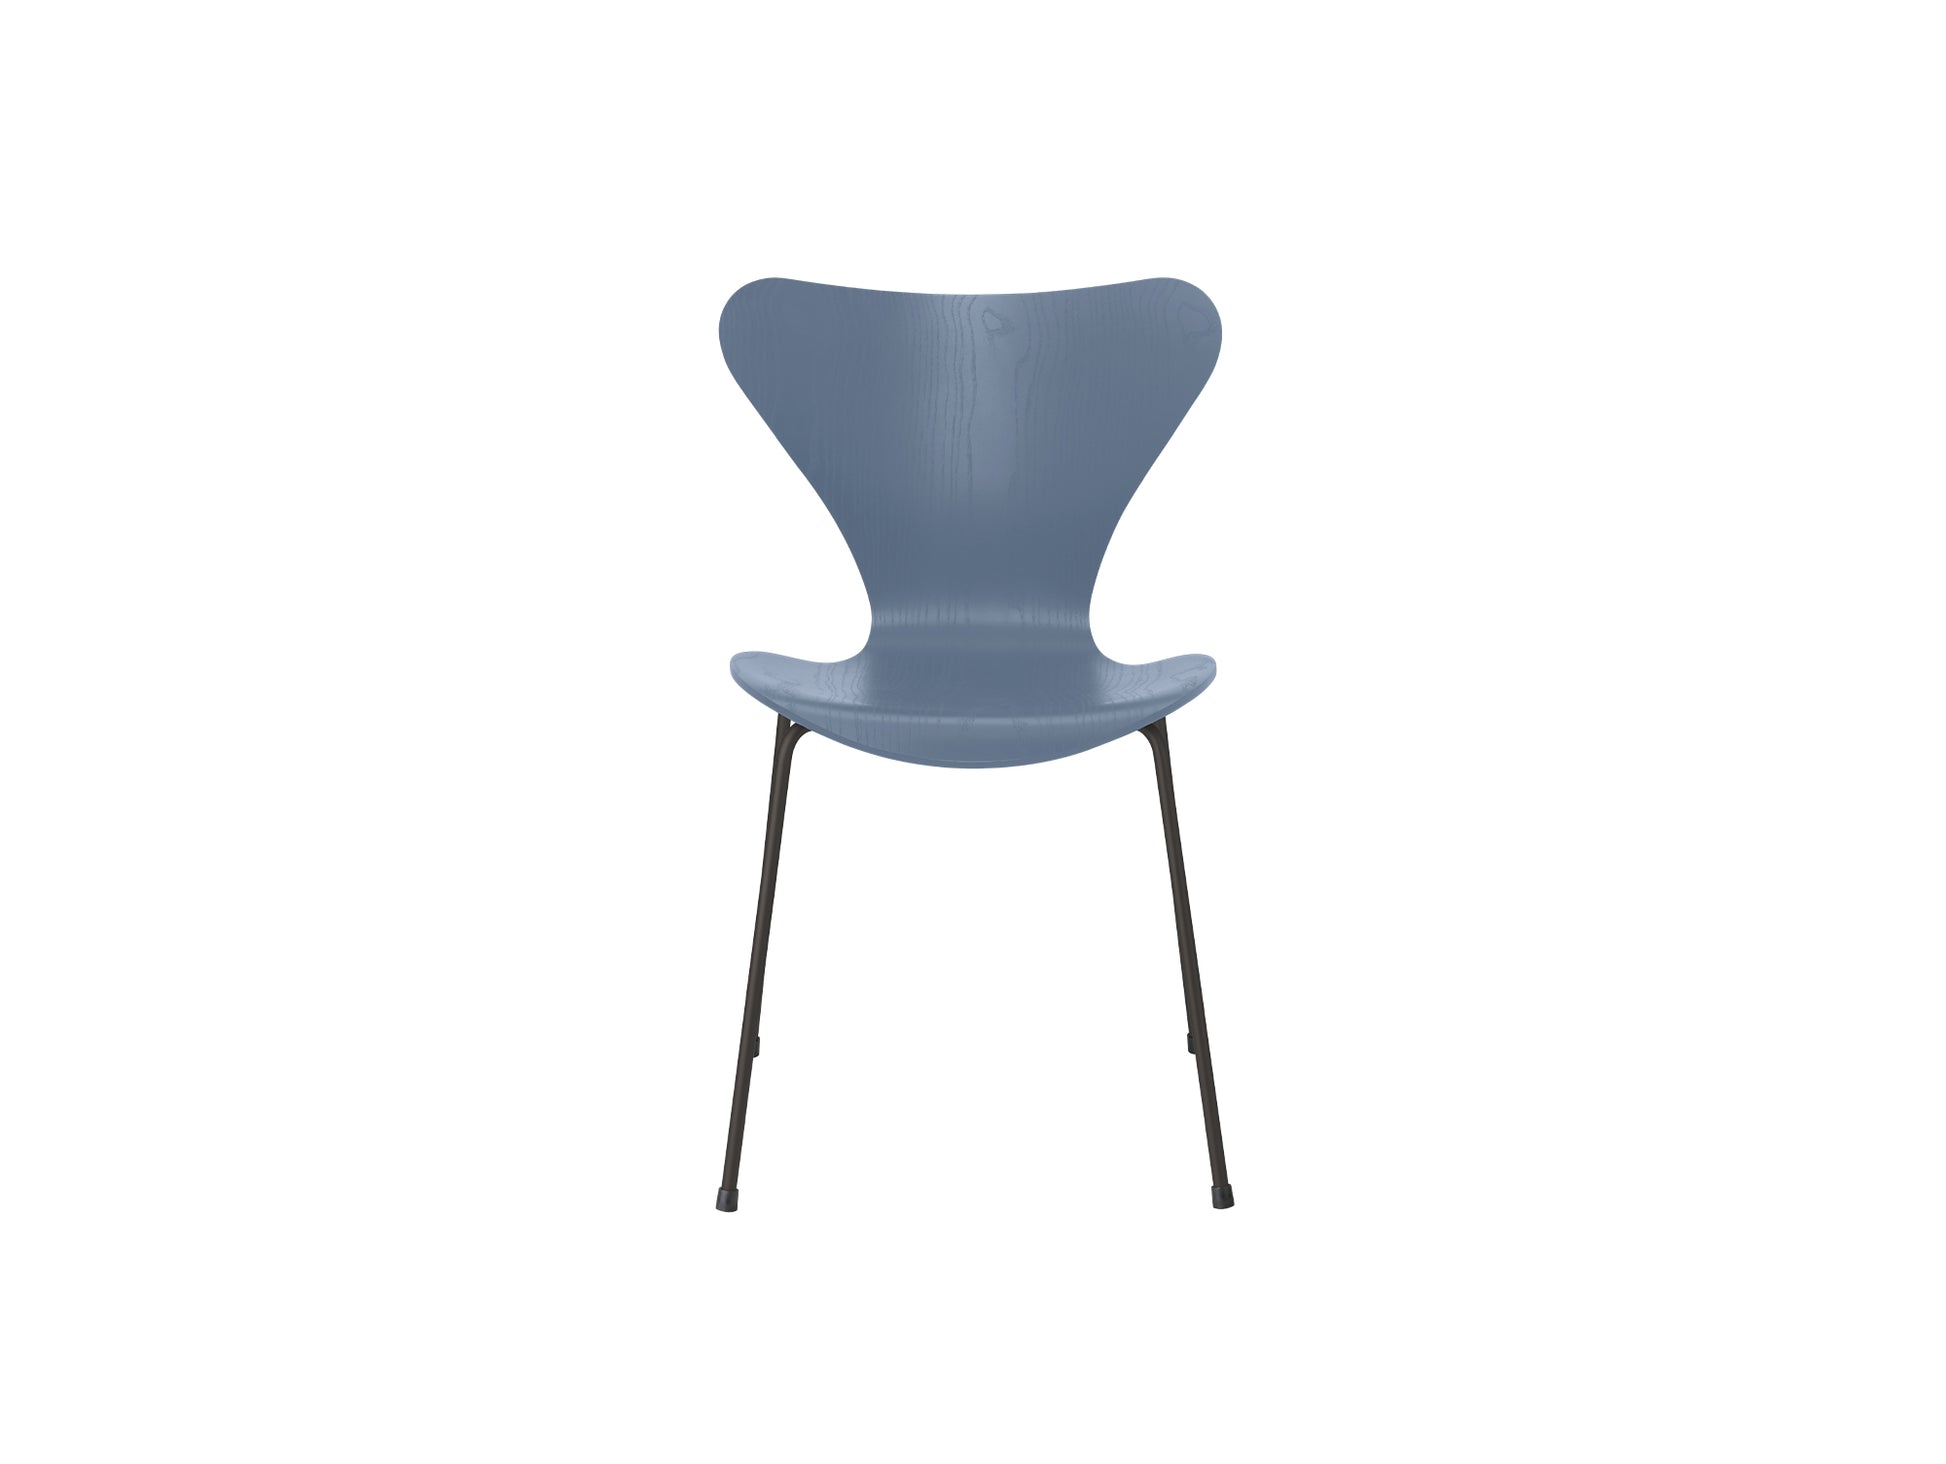 Series 7™ 3107 Dining Chair by Fritz Hansen - Dusk Blue Coloured Ash Veneer Shell / Warm Graphite Steel